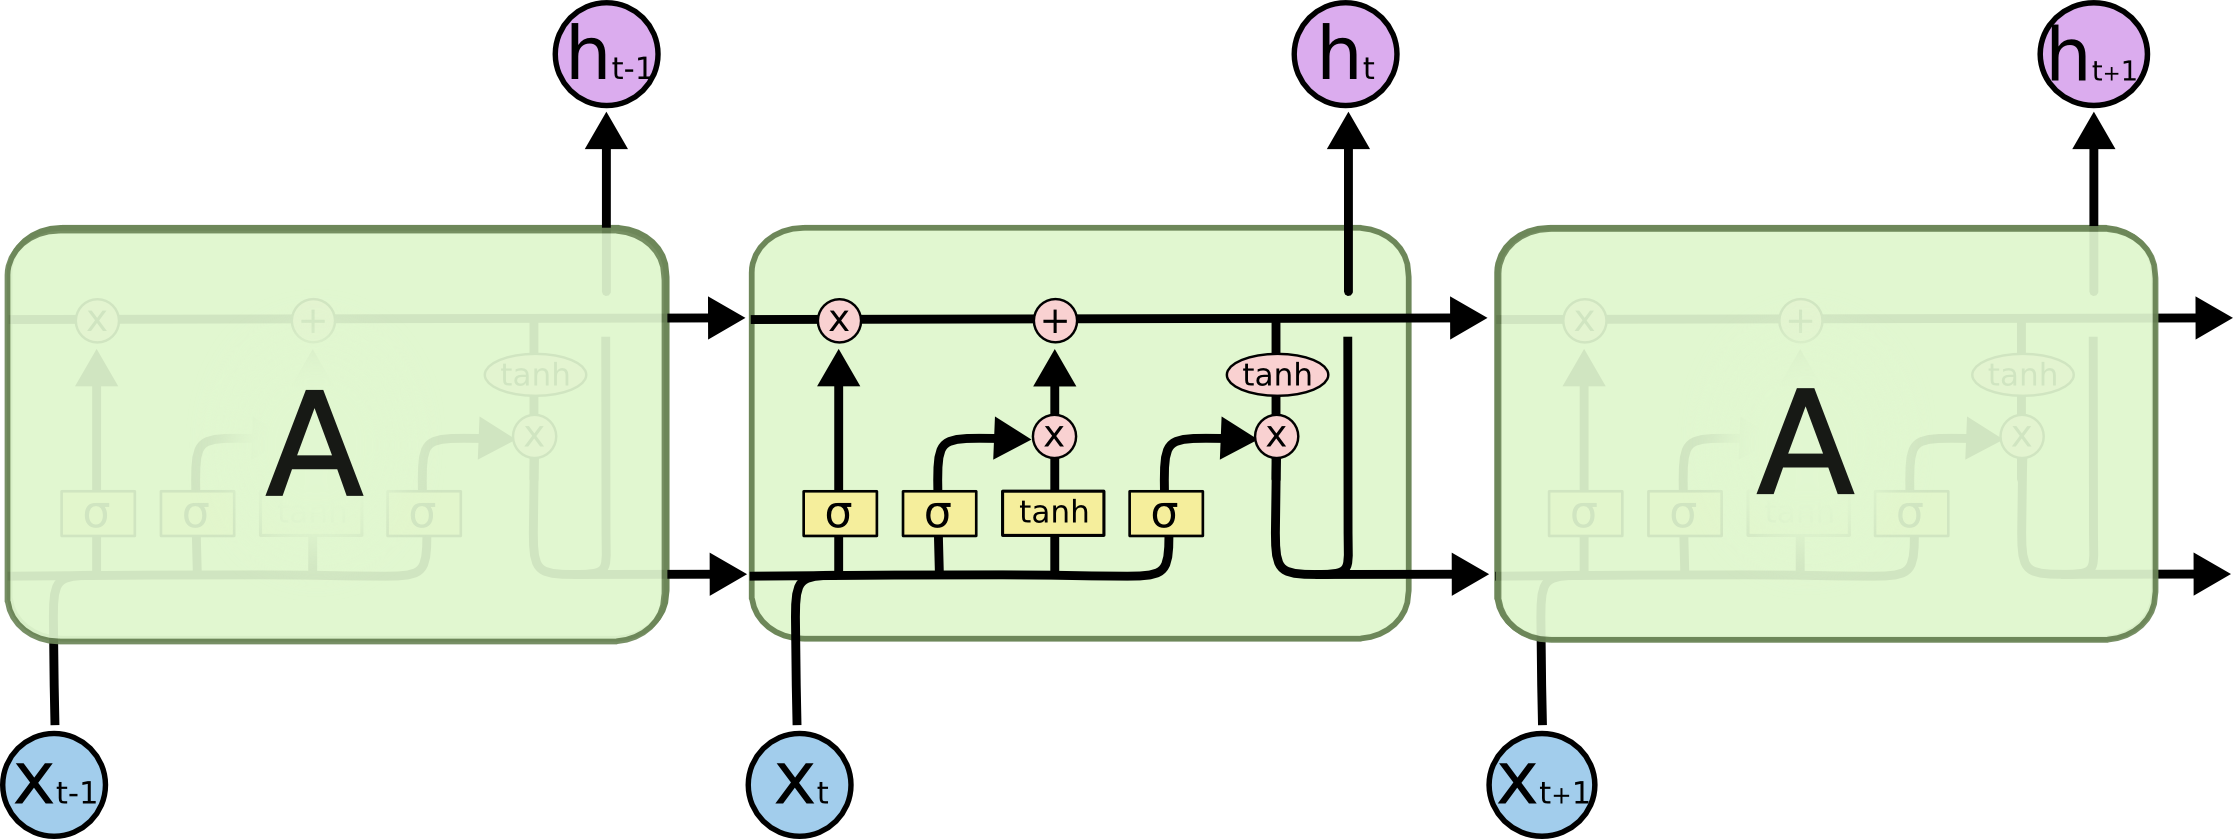 LSTM 的循环模块具有四个交互层。